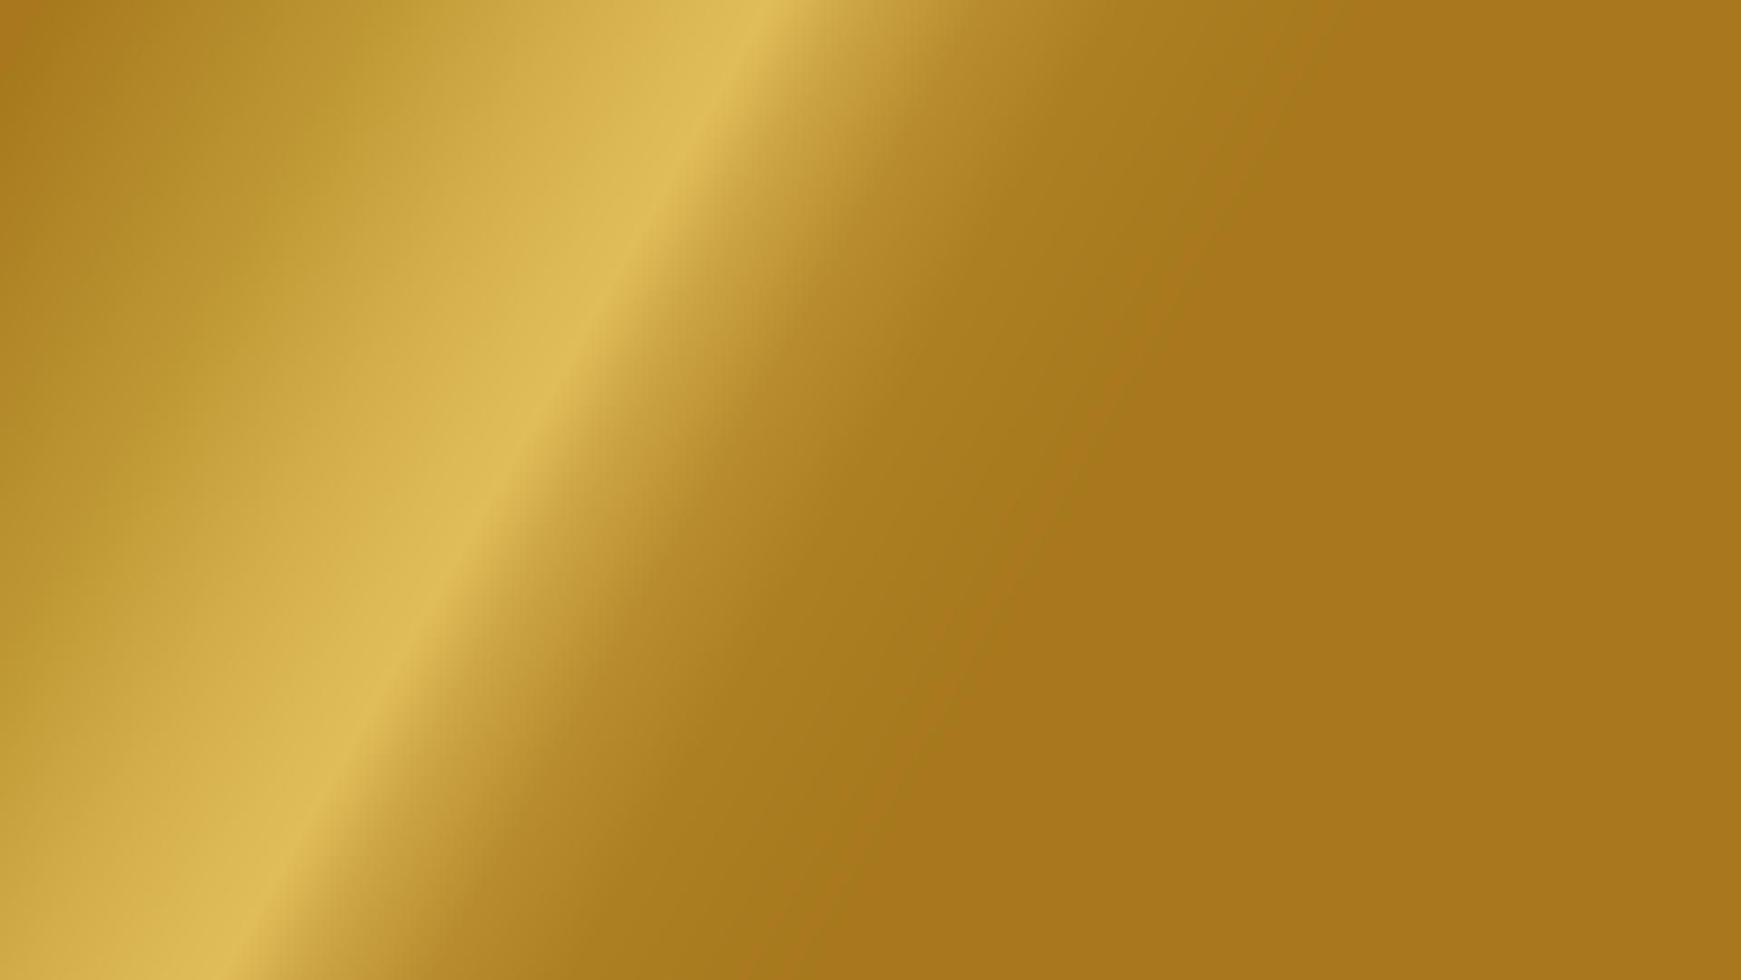 goud helling kleur achtergrond. glimmend metalen structuur met glad oppervlakte voor grafisch ontwerp element vector